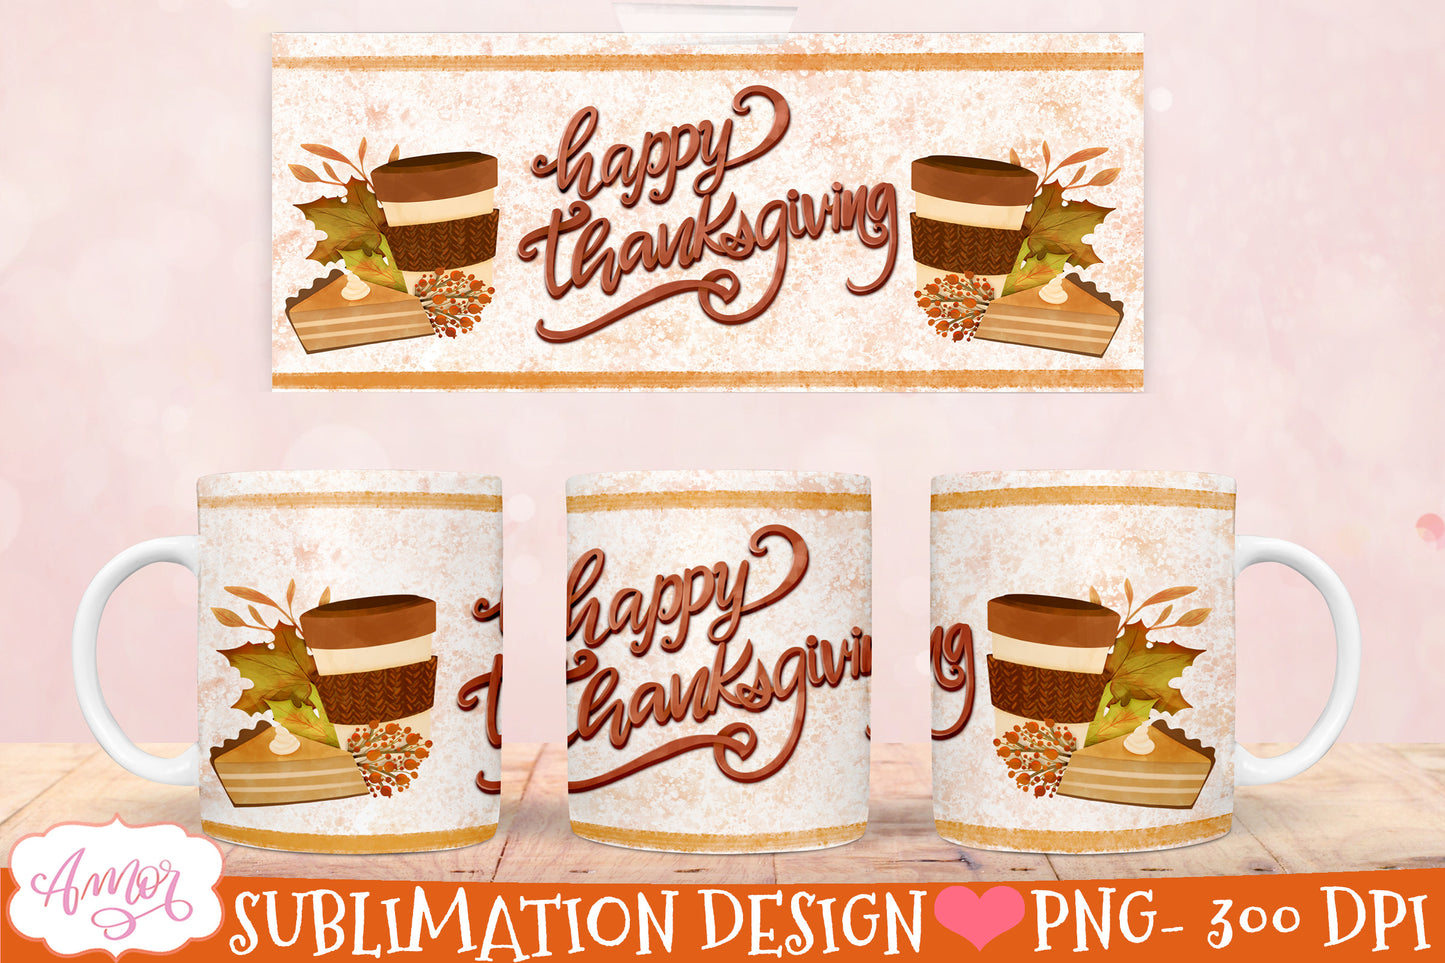 Happy Thansgiving mug wrap for sublimation 11oz and 15oz